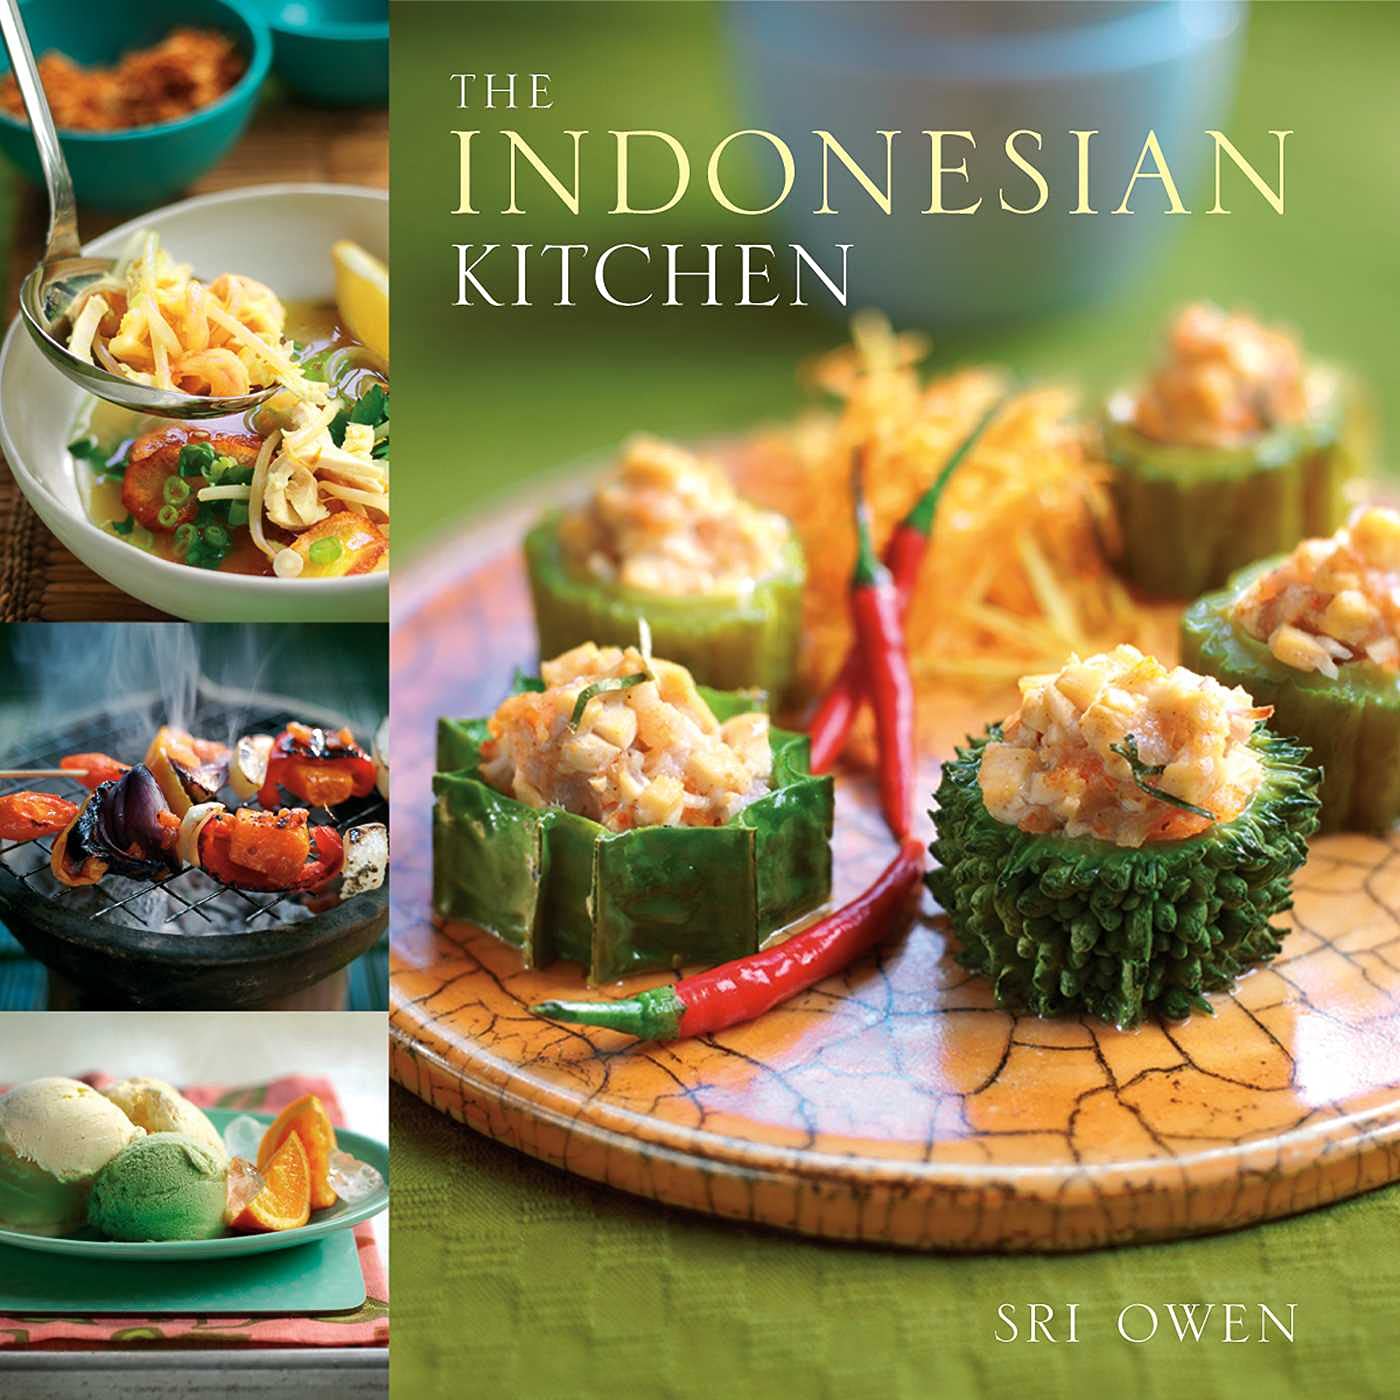 The Indonesian Kitchen (Sri Owen)